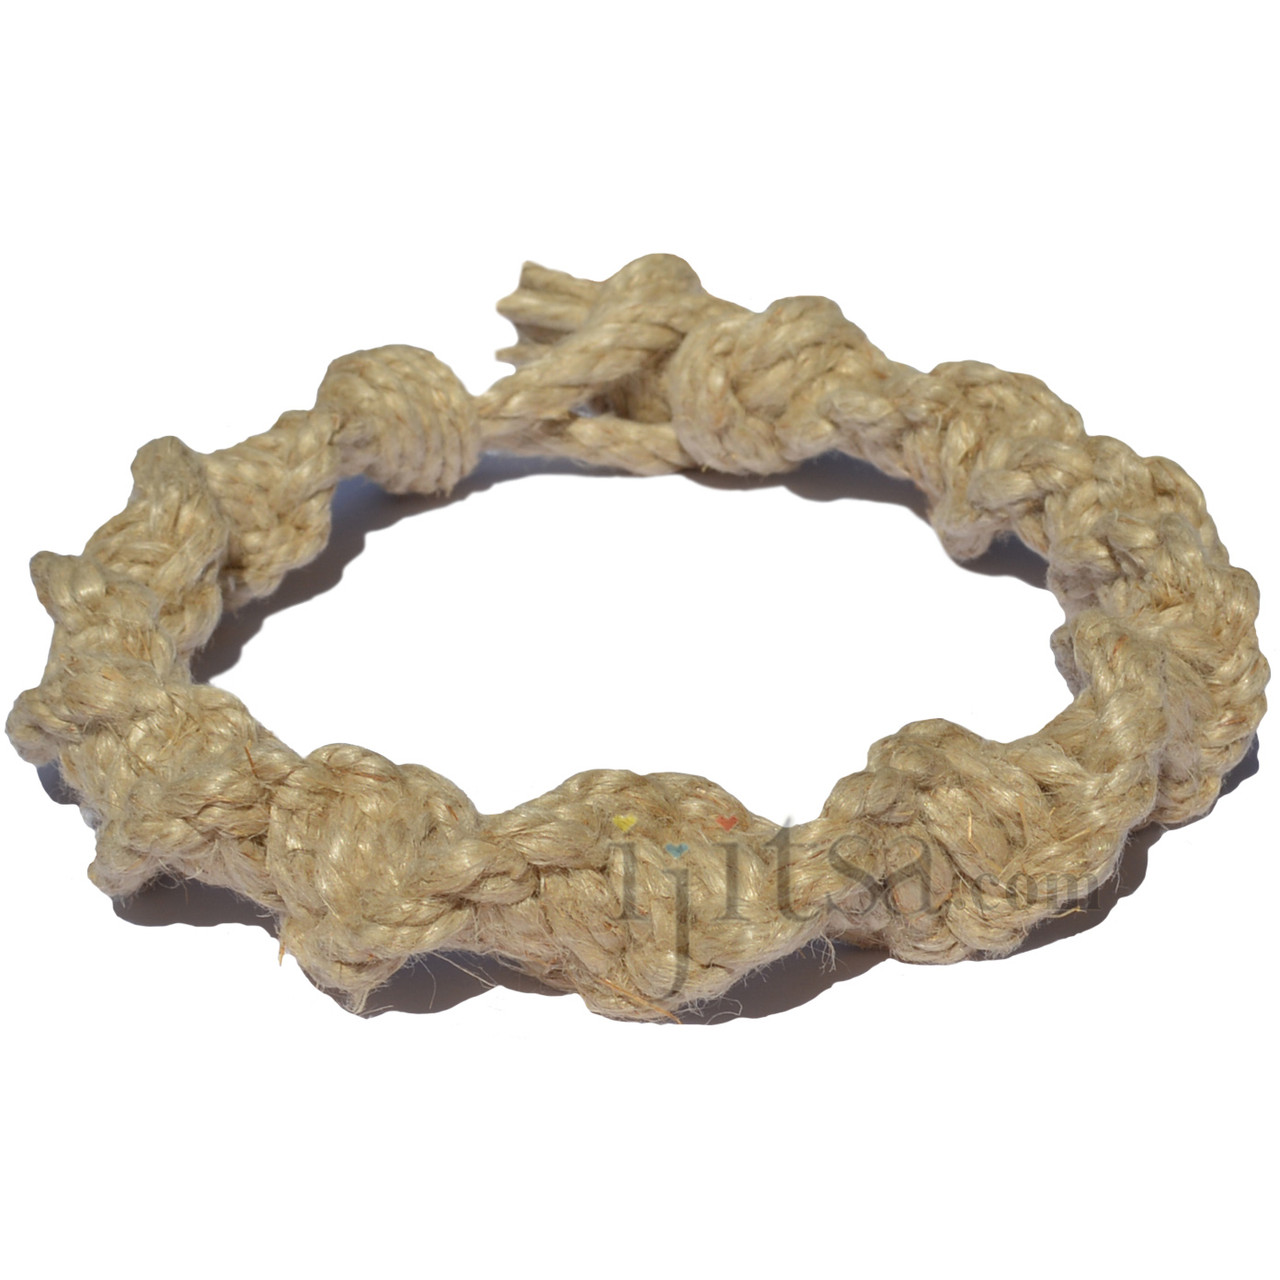 Handmade Flat Hemp Choker Necklace with White Howlite Stone Beads 